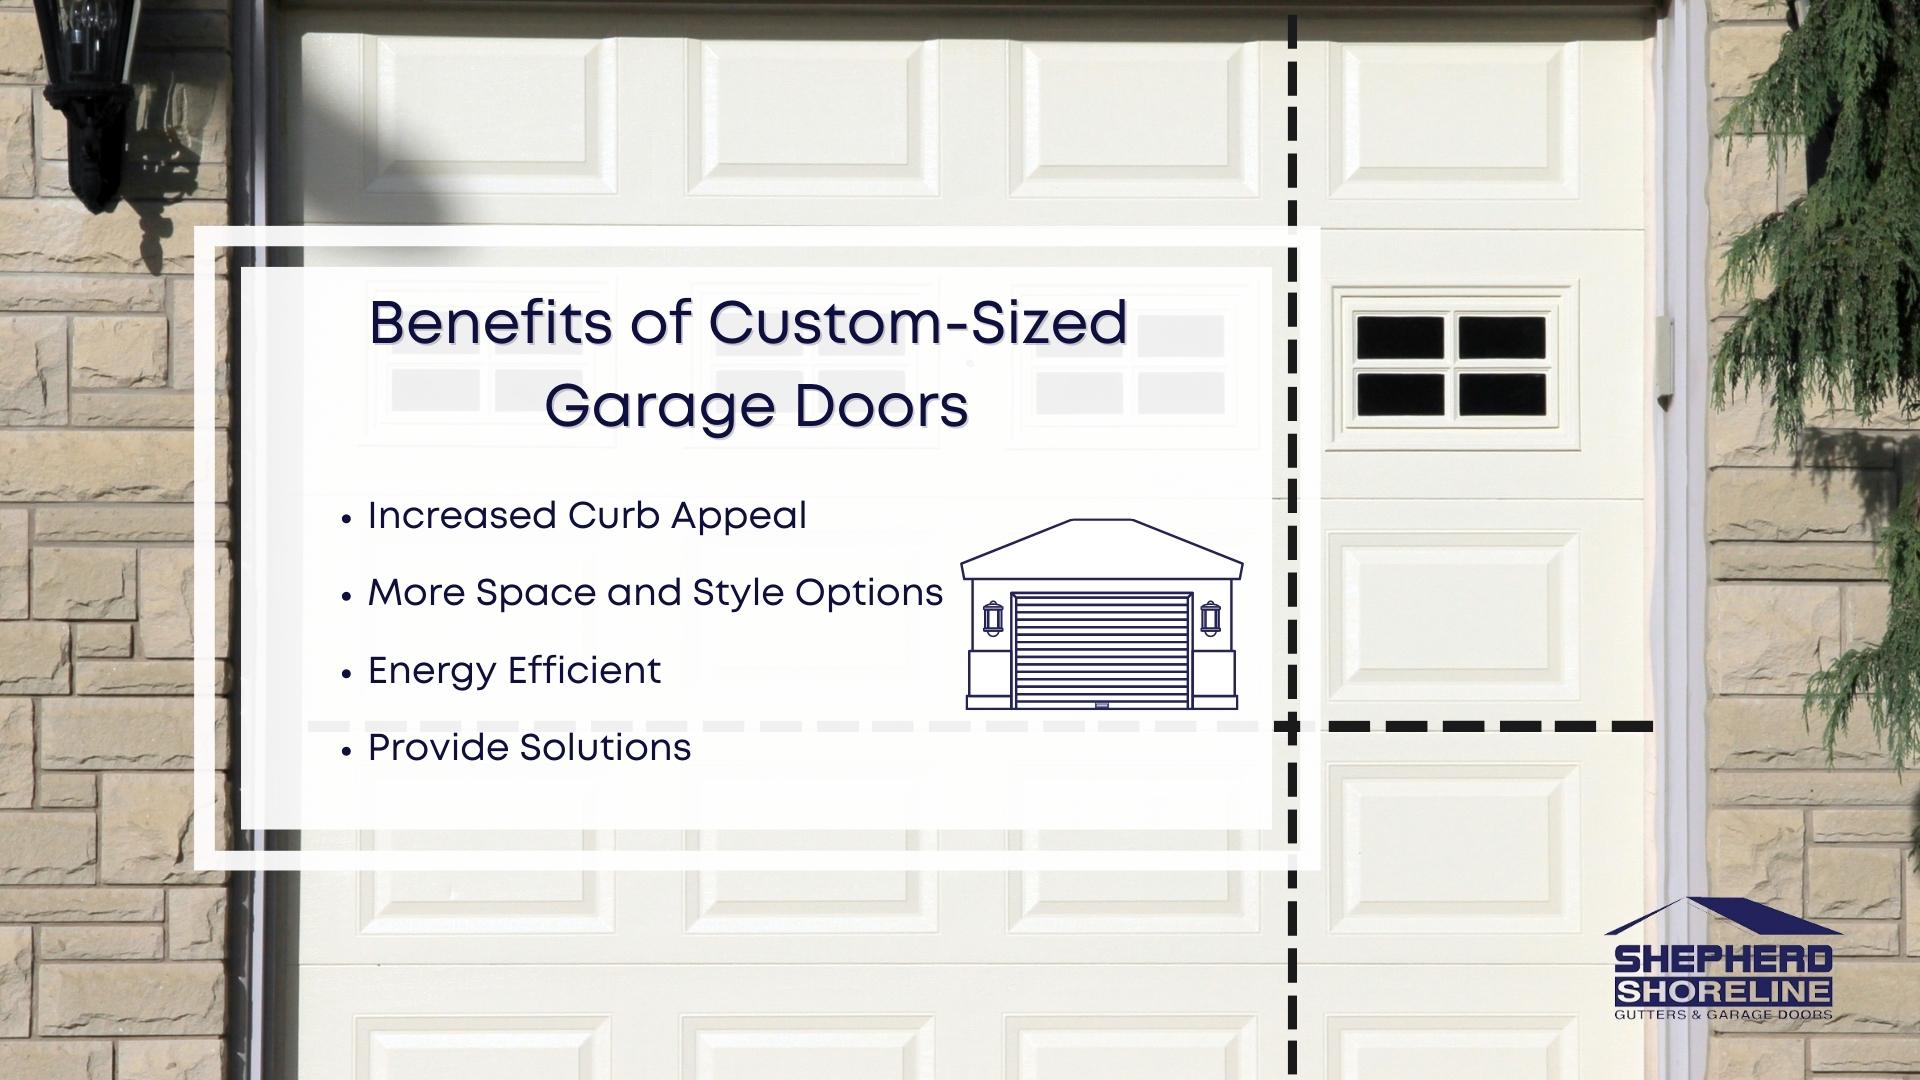 Infographic image of the benefits of custom-sized garage doors